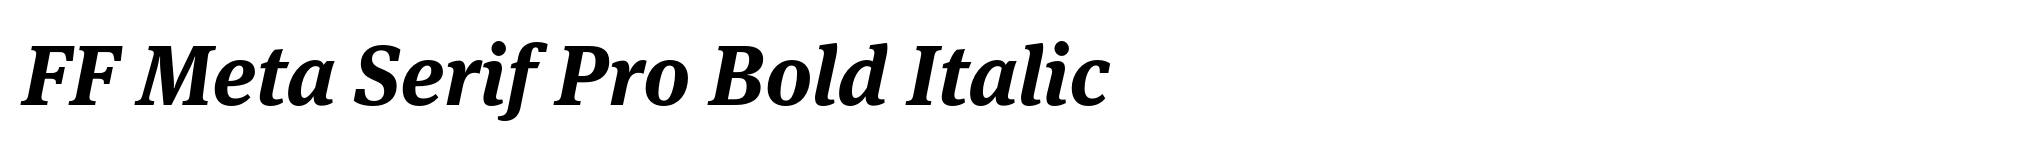 FF Meta Serif Pro Bold Italic image